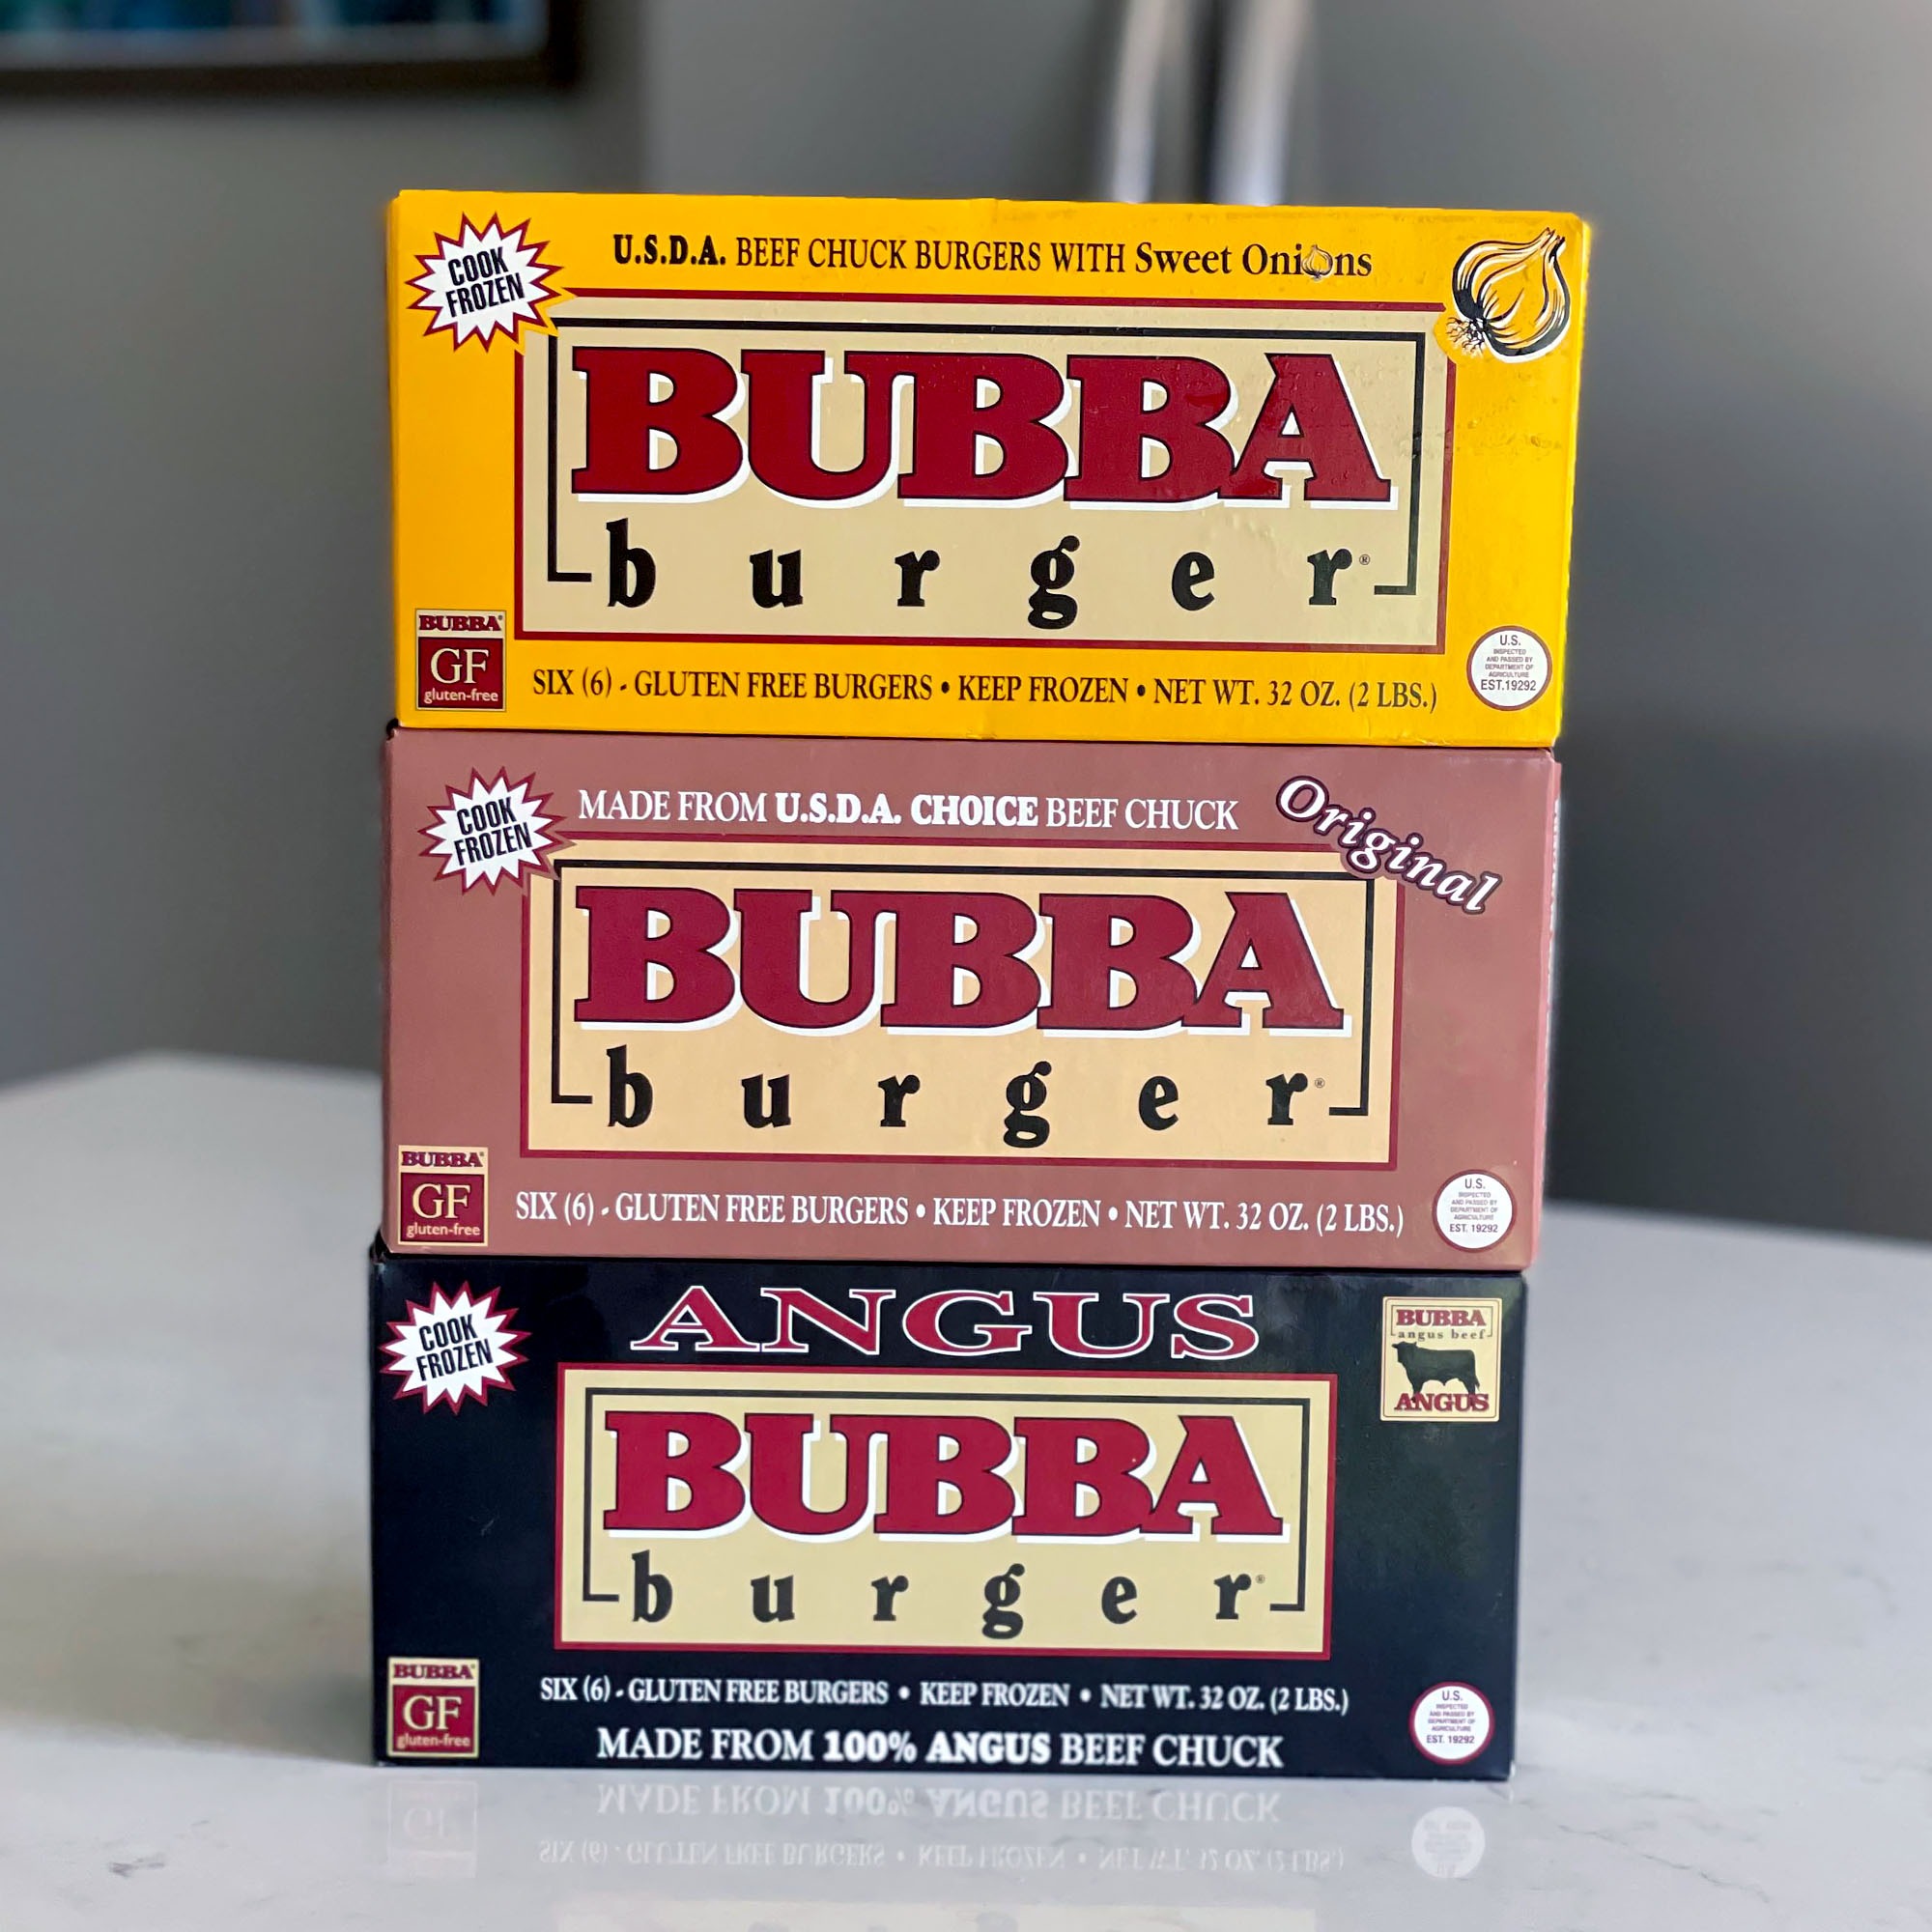 BUBBA burgers